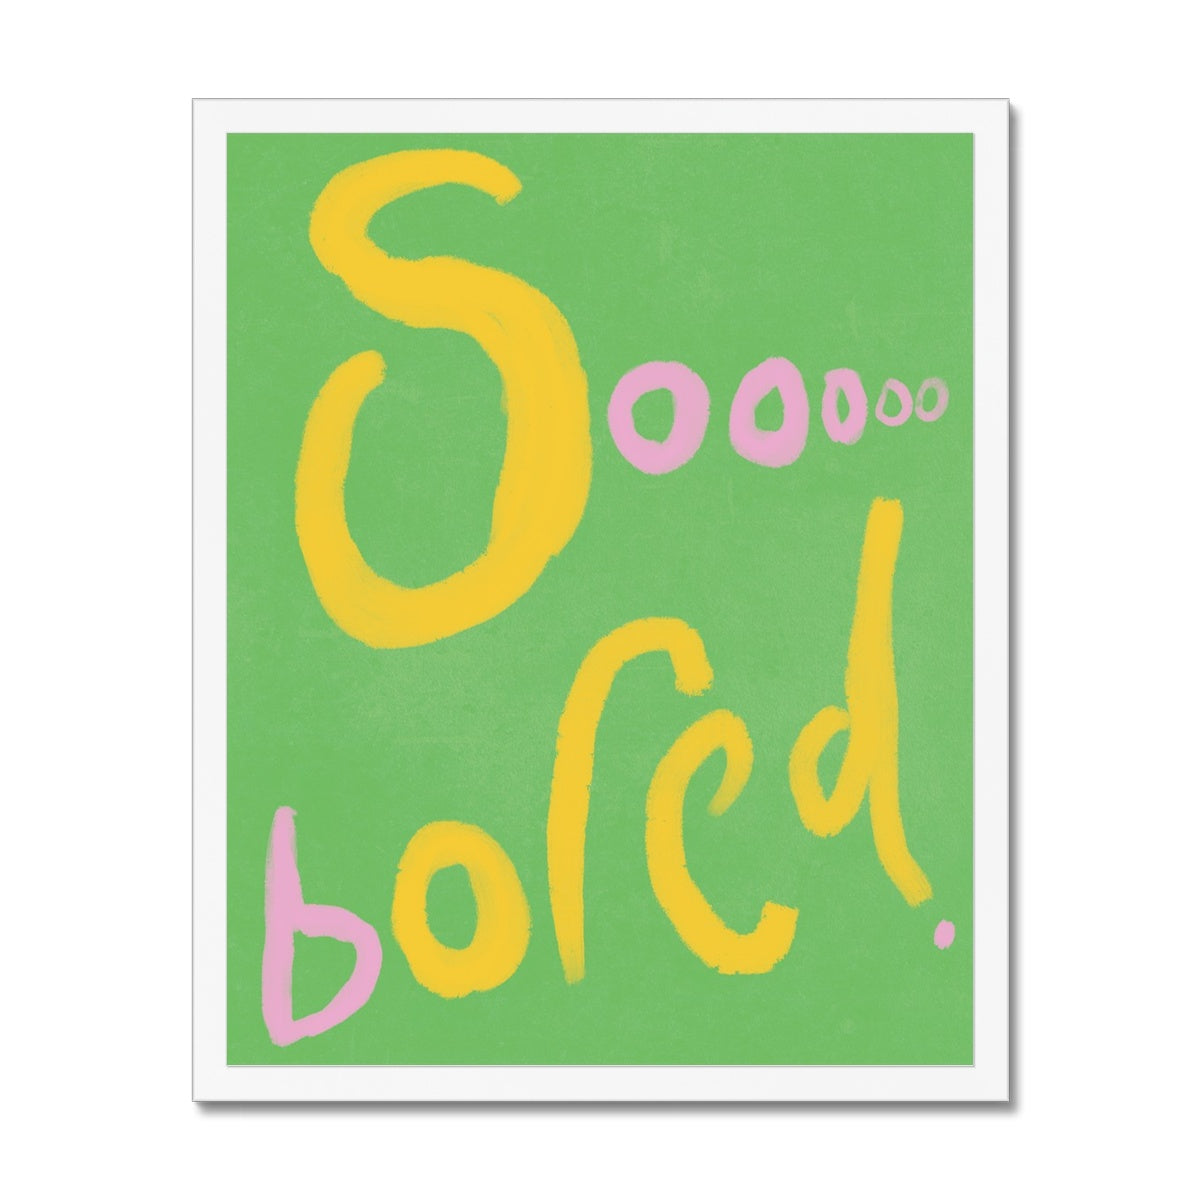 Sooooo Bored Print - Green, Pink, Yellow Framed Print